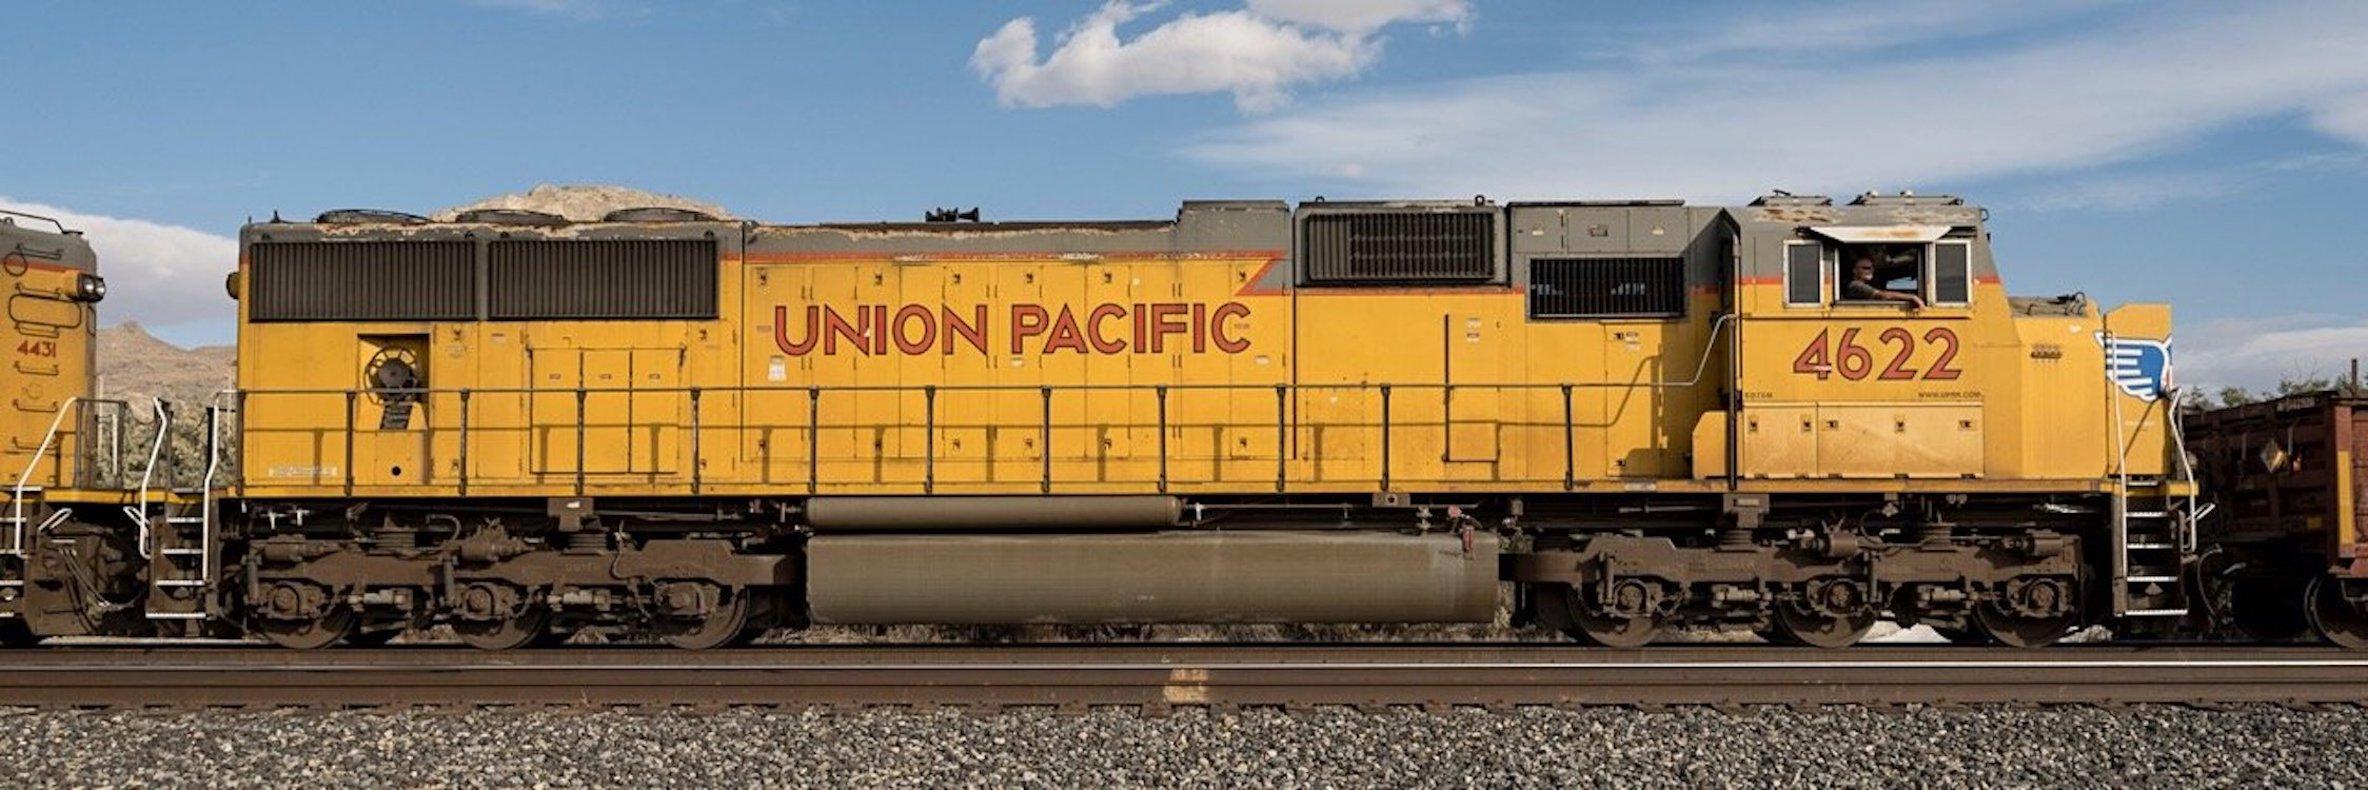 Stephen Mallon Landscape Photograph - "Locomotive UP462" Contemporary photograph of railroad train car limited ediiton